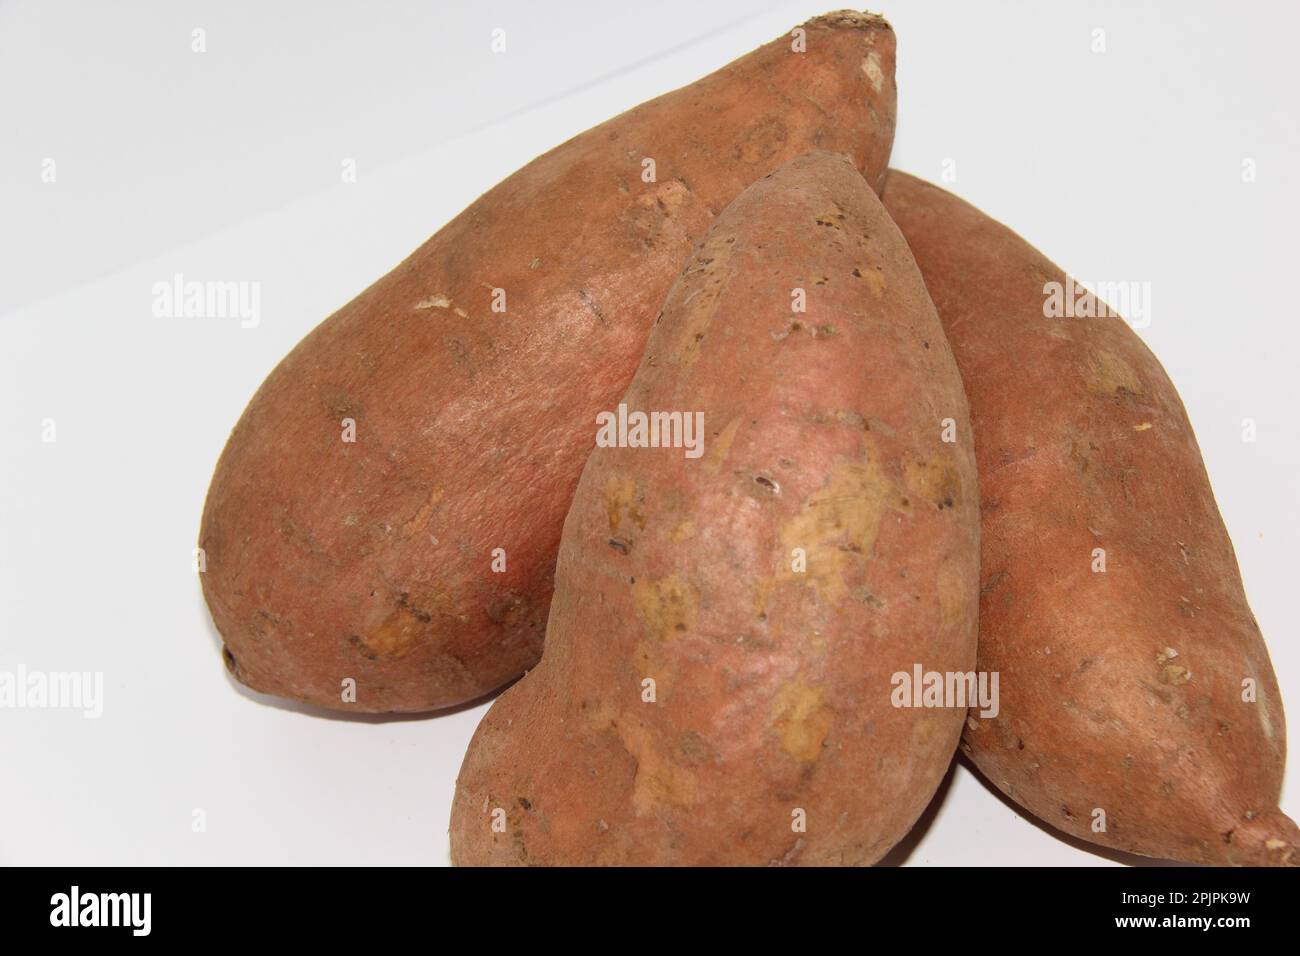 sweet potatoes Stock Photo